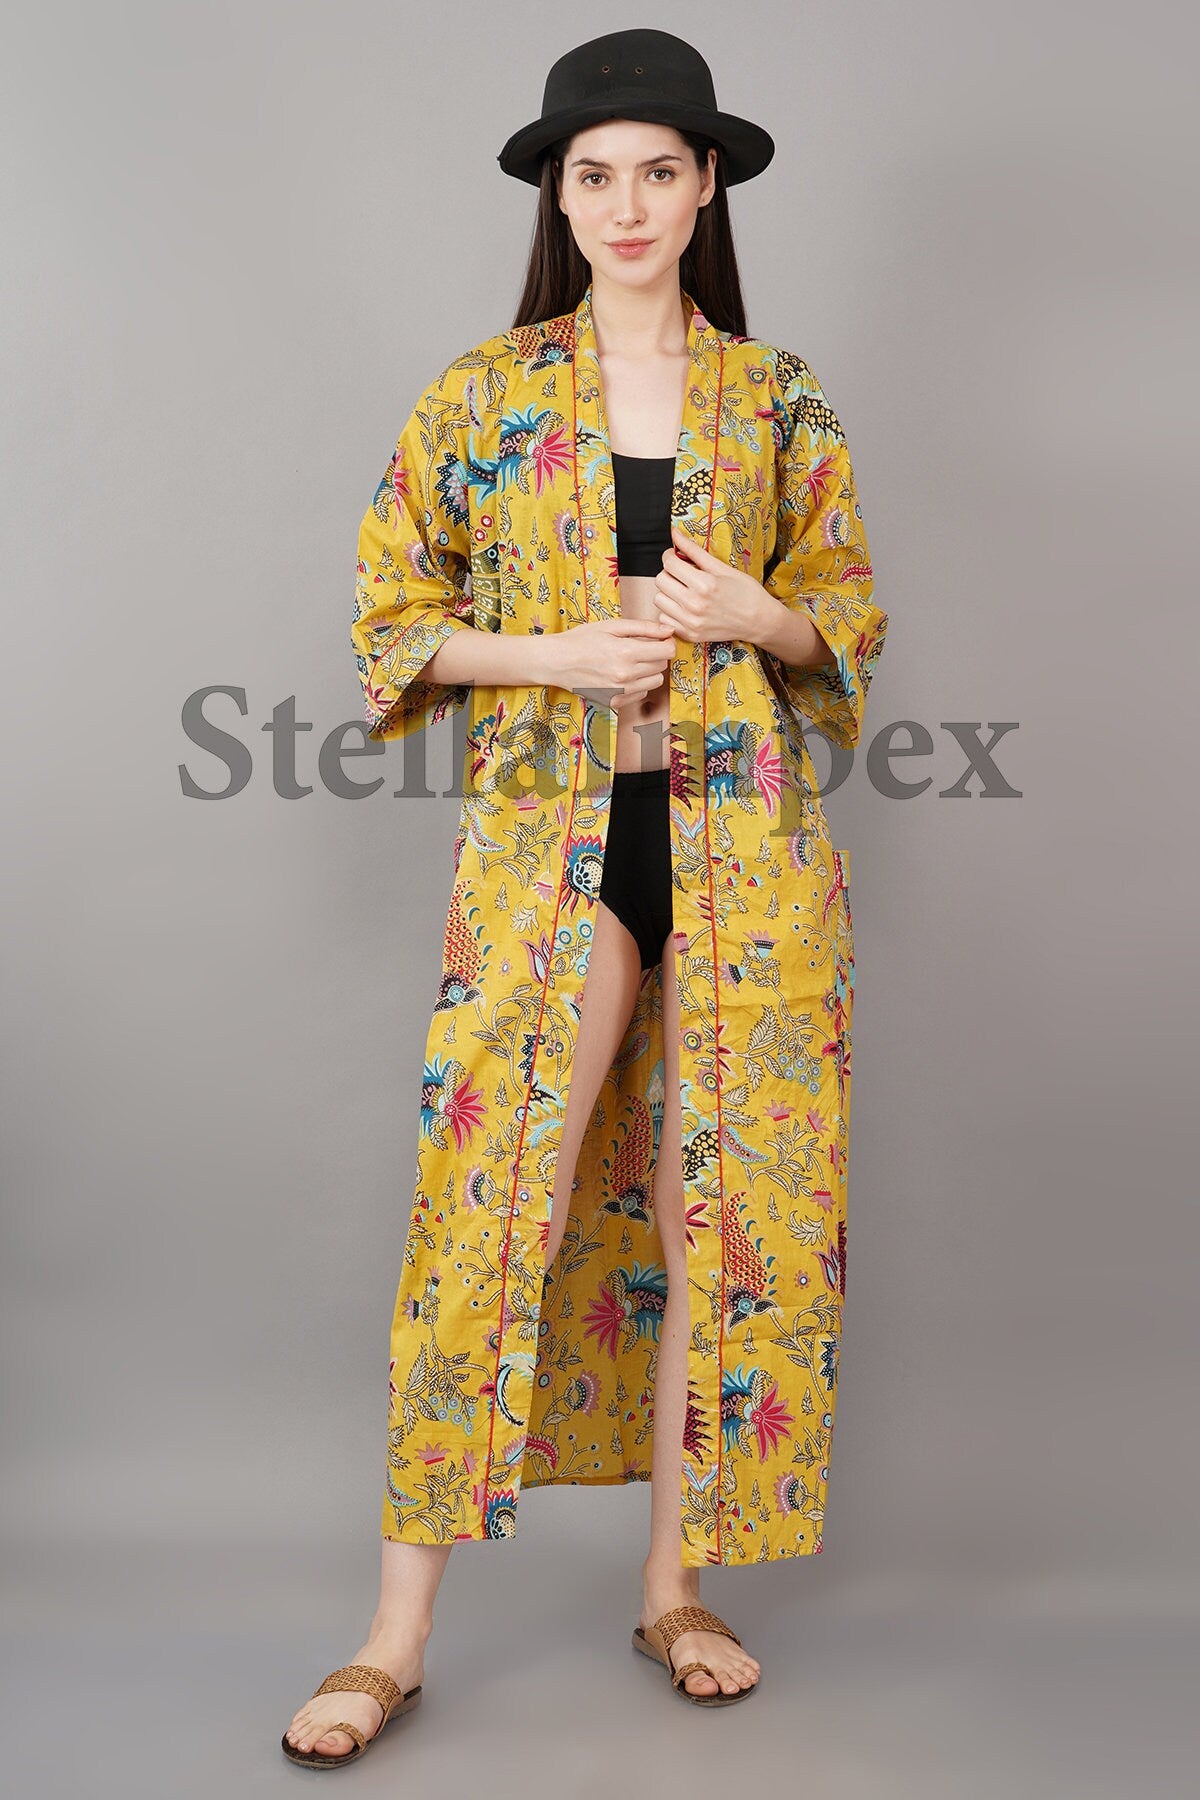 Yellow Print Elegant Cotton Kimono Bathrobe Resort Wear Beach Bikini Cover-ups Boho Kimono Bathrobe, Gift for Her